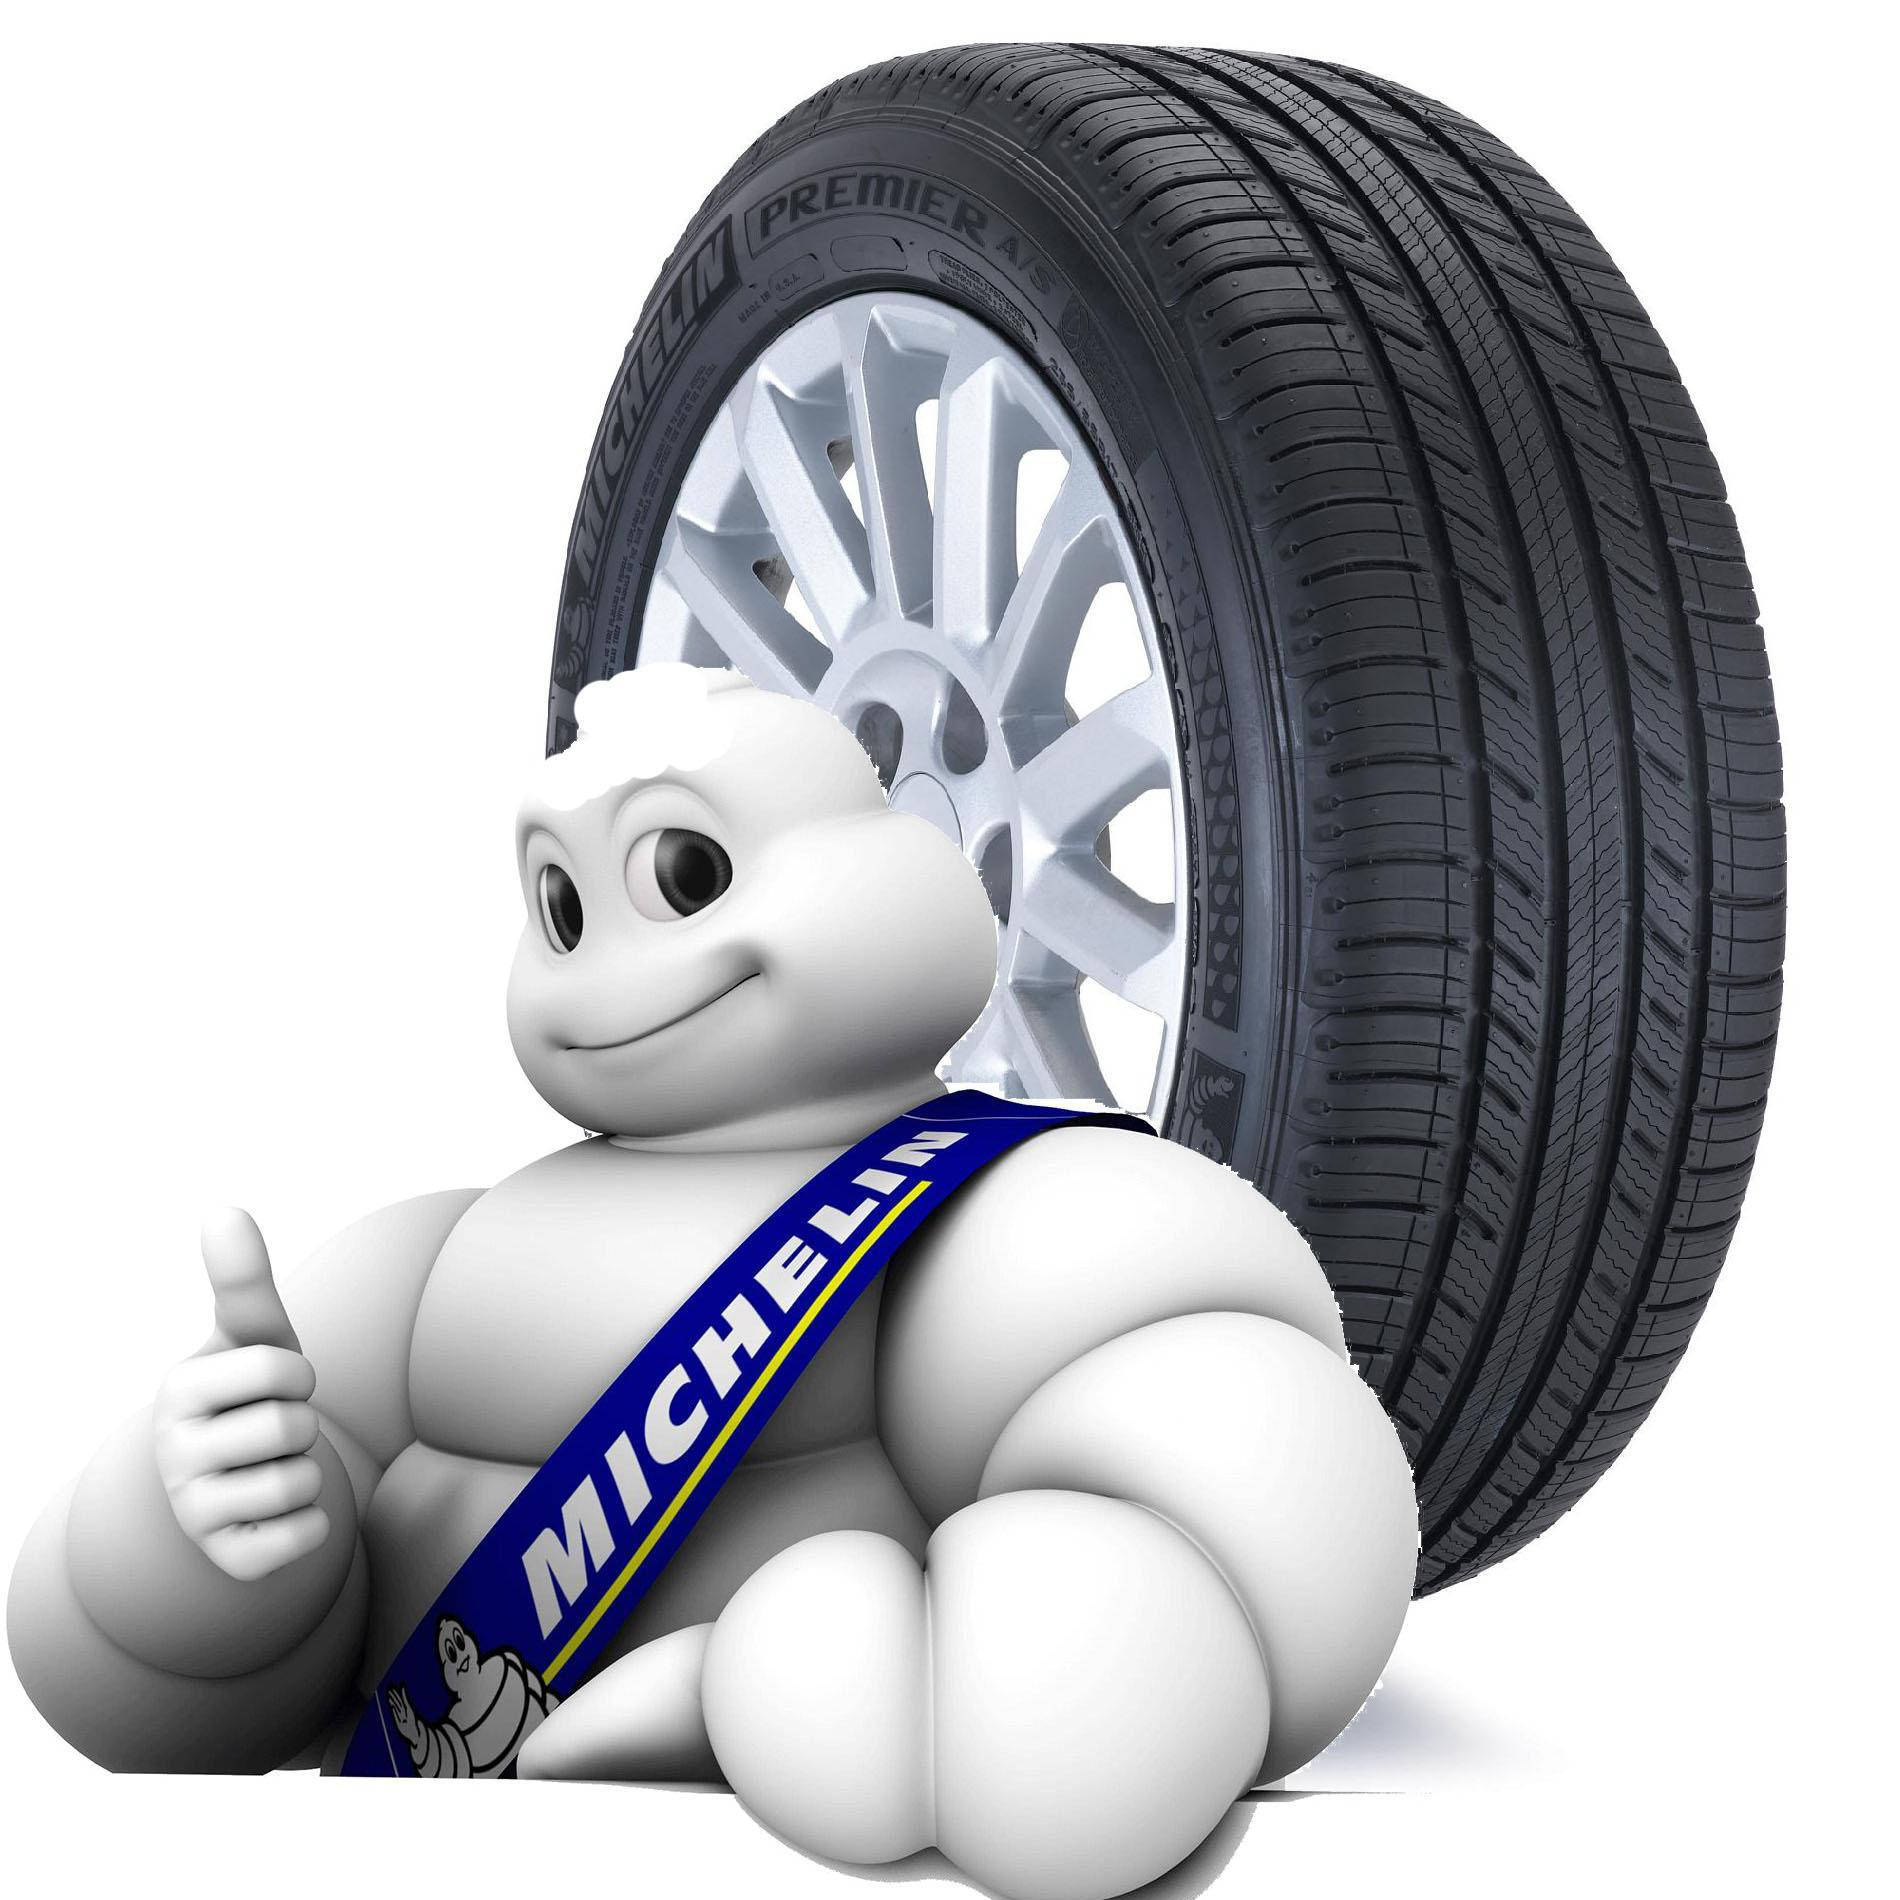 Michelinmarshmallow Tire Man In Italian Would Be 